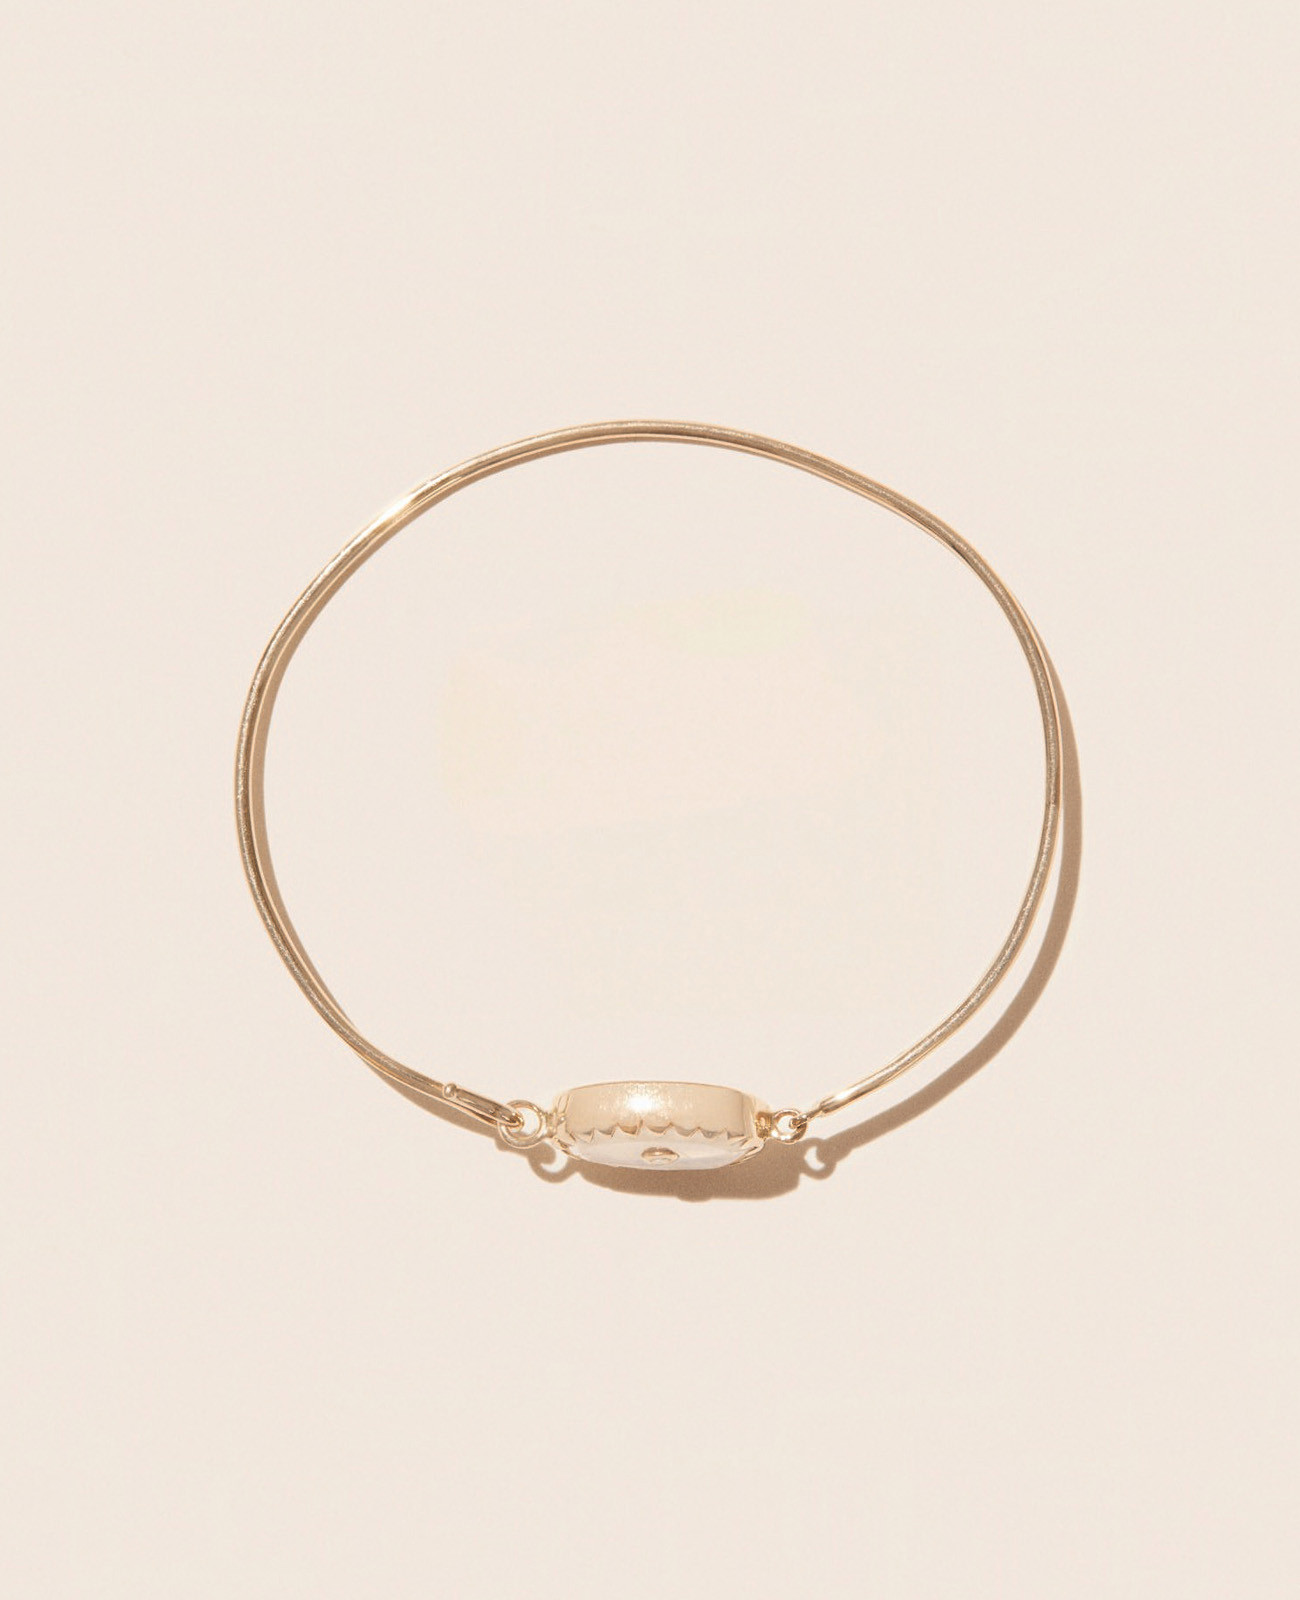 ORSO MOONSTONE bracelet pascale monvoisin jewelry paris